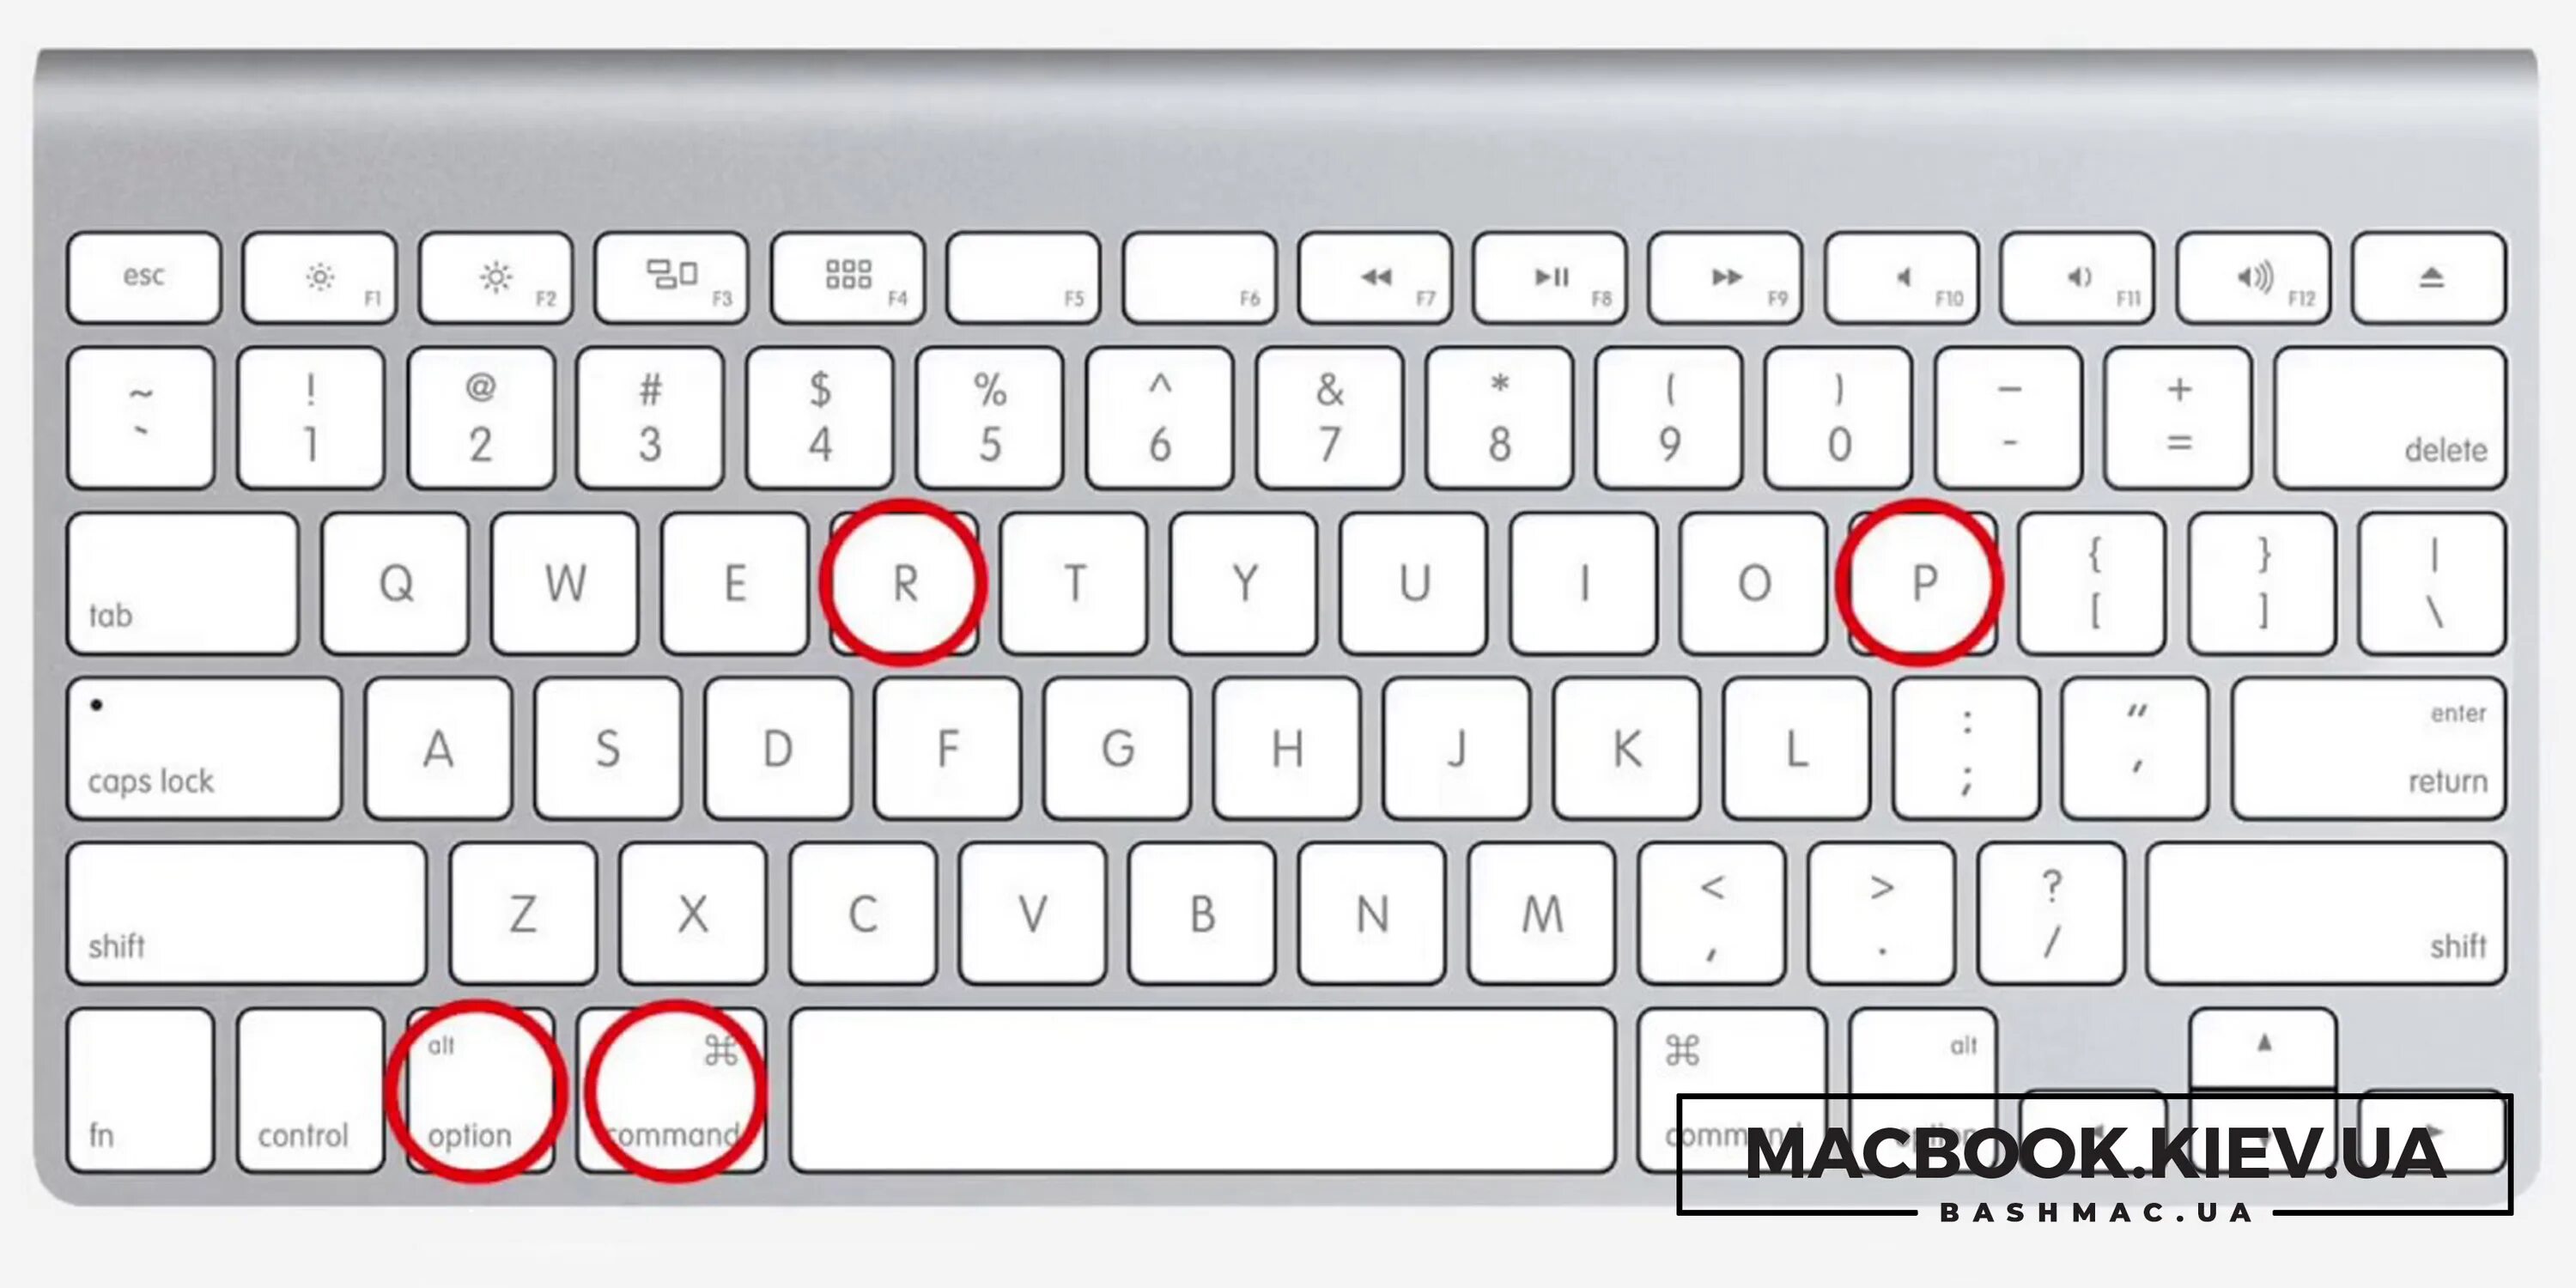 Скриншот на маке. Скриншот на MACBOOK. Клавиатура компьютера на экран. Скрин экрана на макбуке.